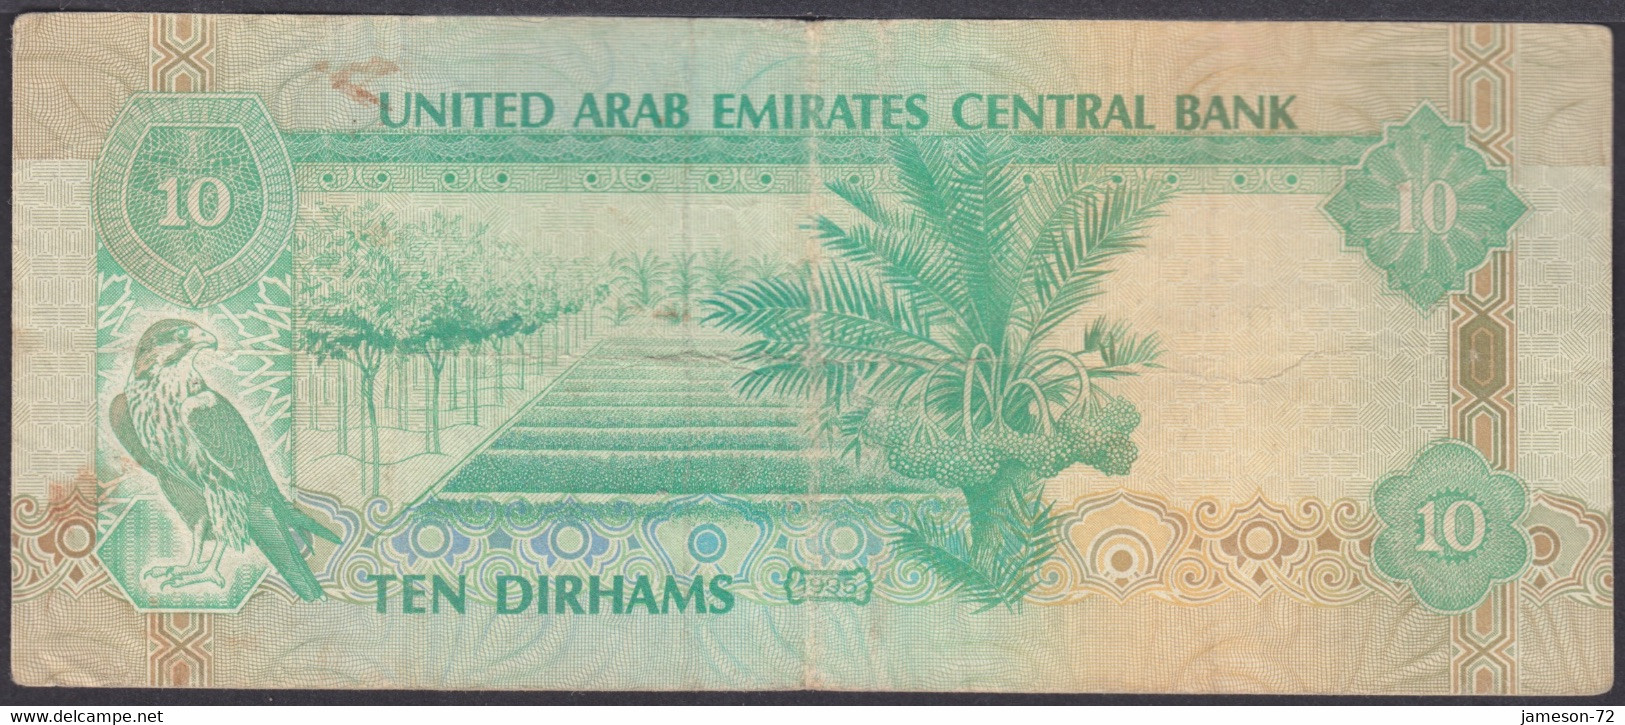 UNITED ARAB EMIRATES - 10 Dirhams AH1416 1995AD P# 13b - Edelweiss Coins - Emirats Arabes Unis